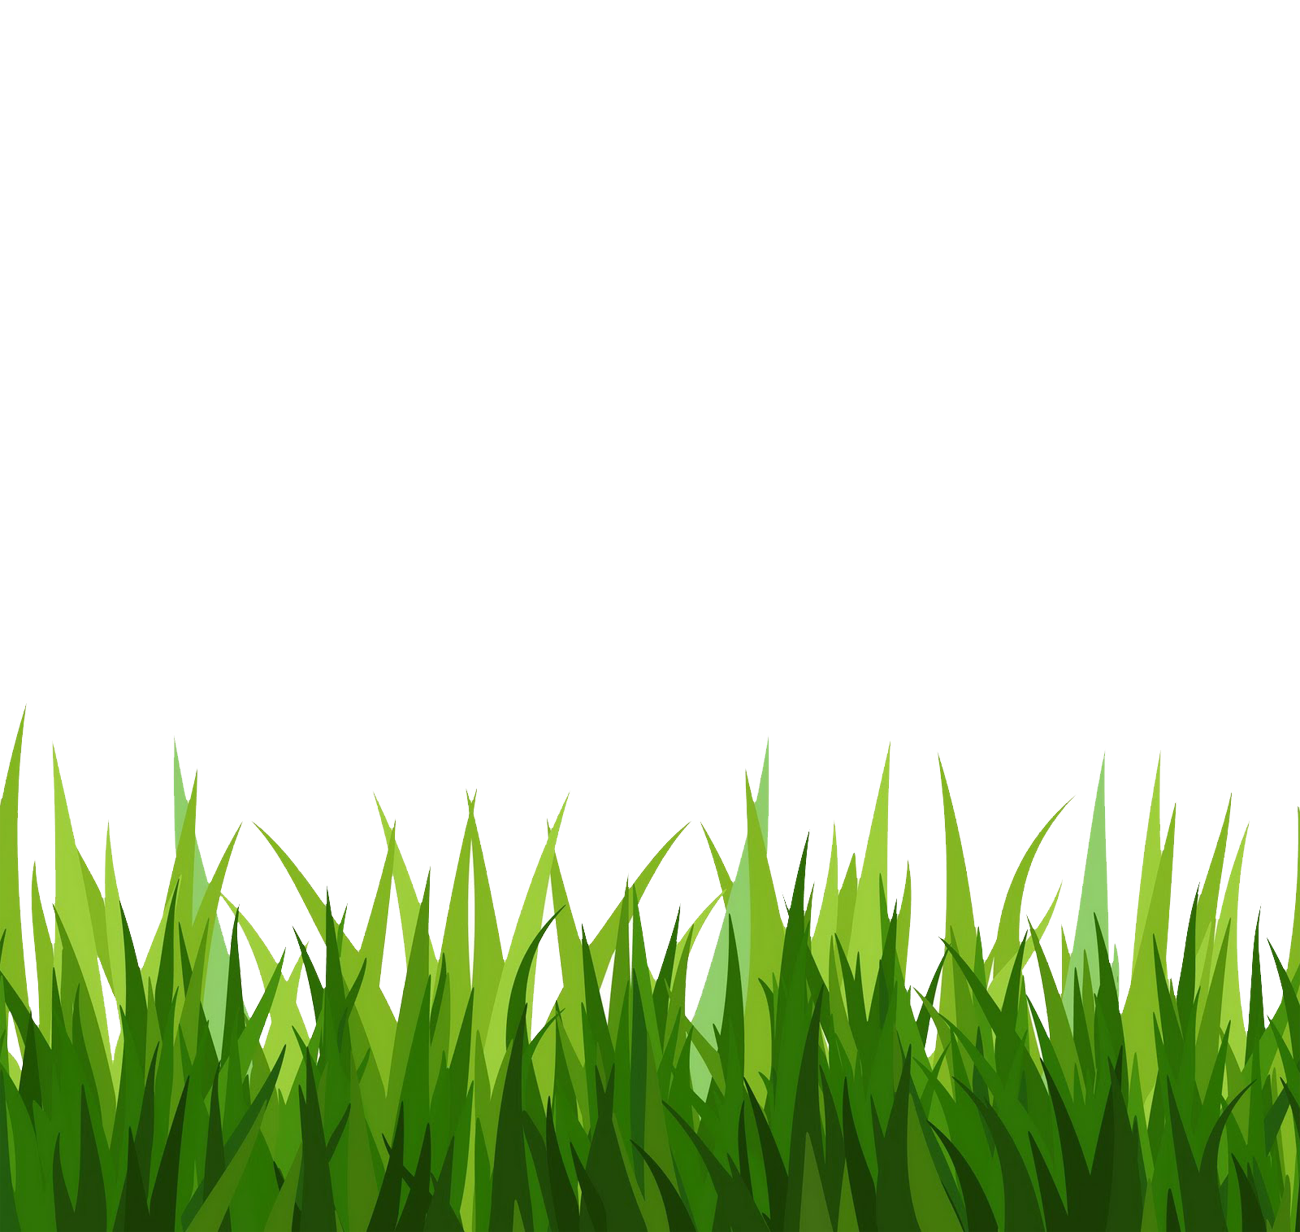 Grass clipart image green